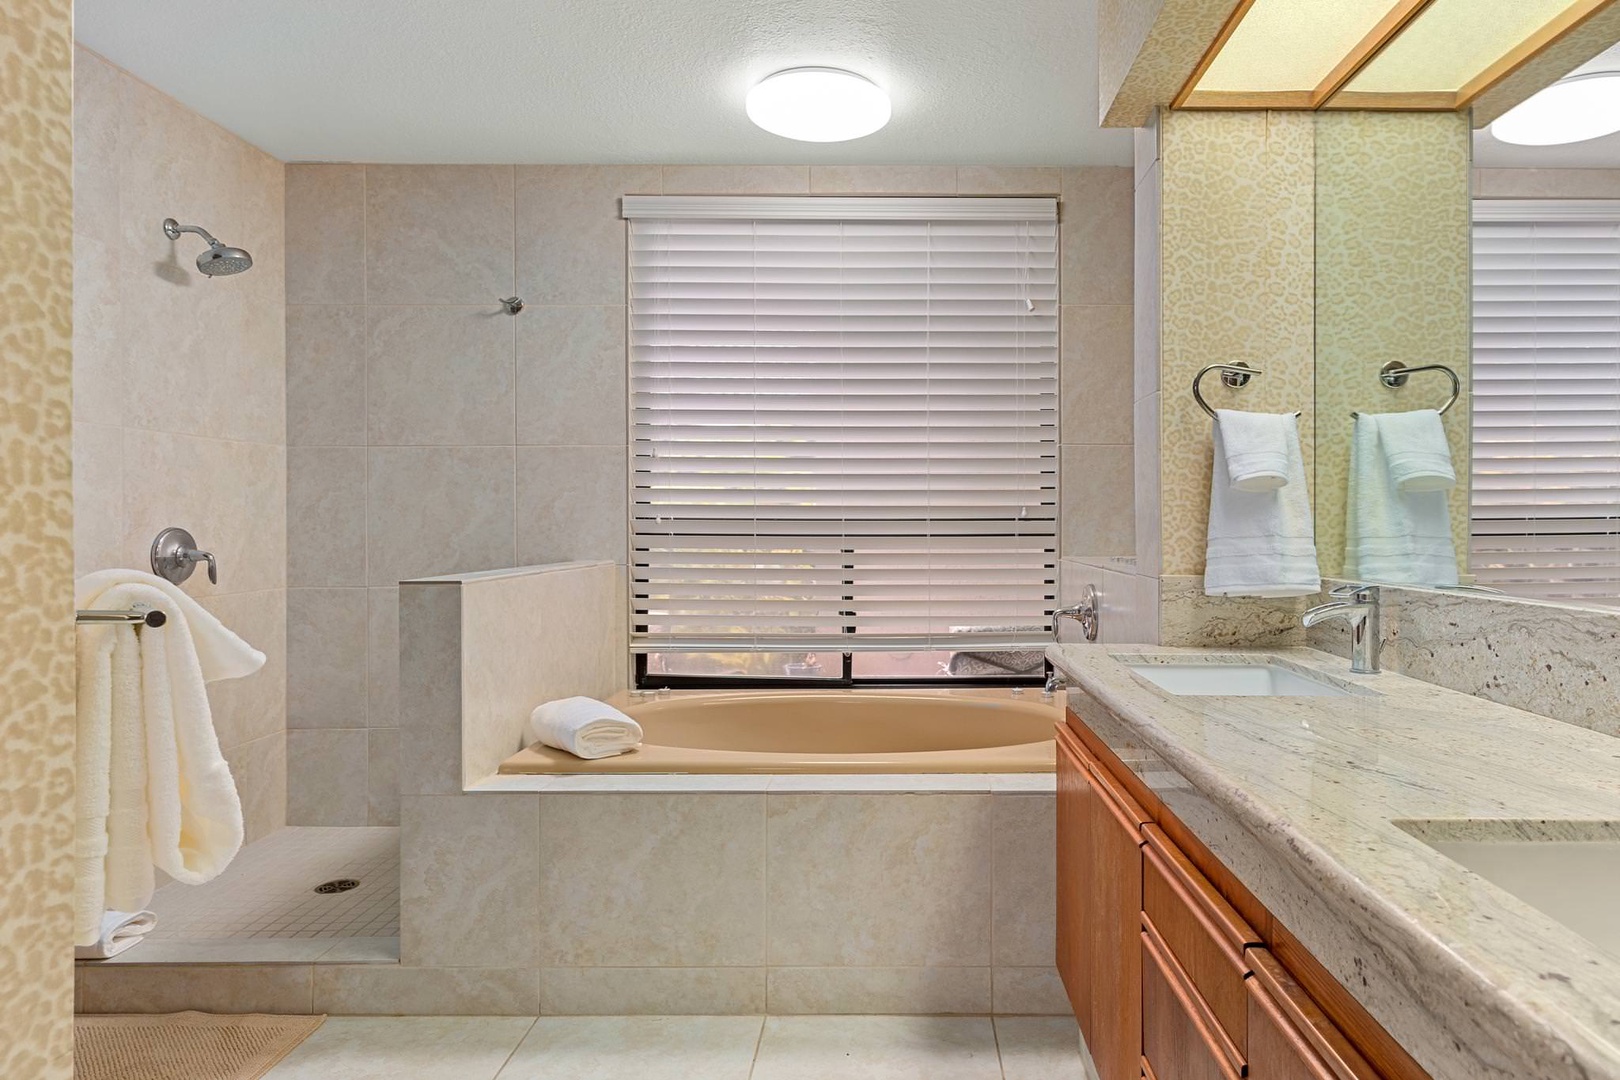 En suite bathroom with soaking tub, standing shower, and dual sinks